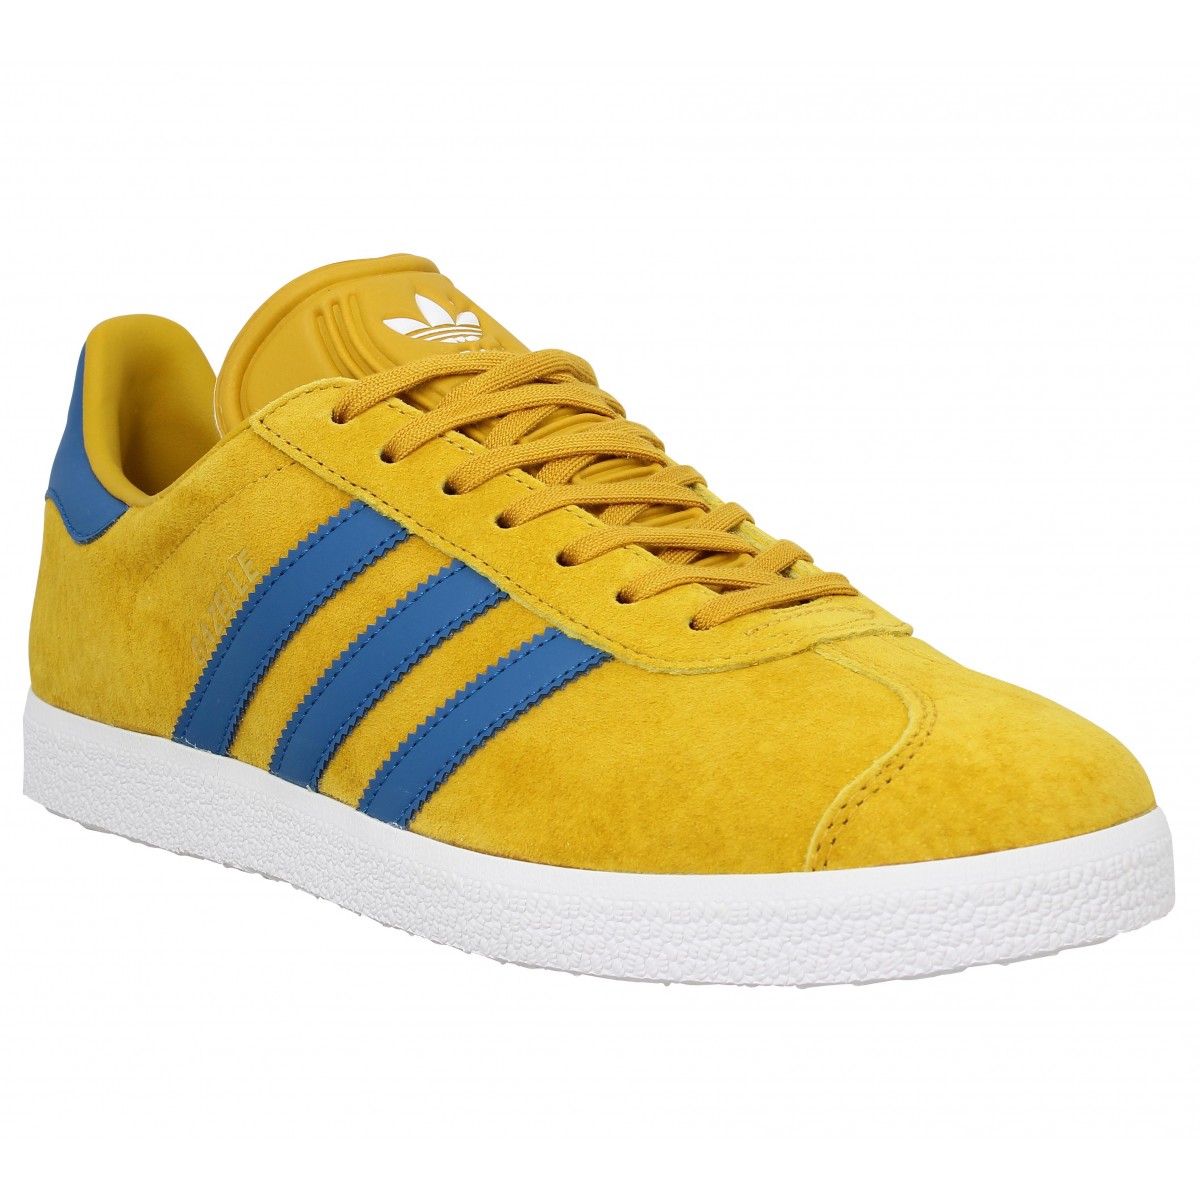 Adidas gazelle homme jaune bleu homme | Fanny chaussures